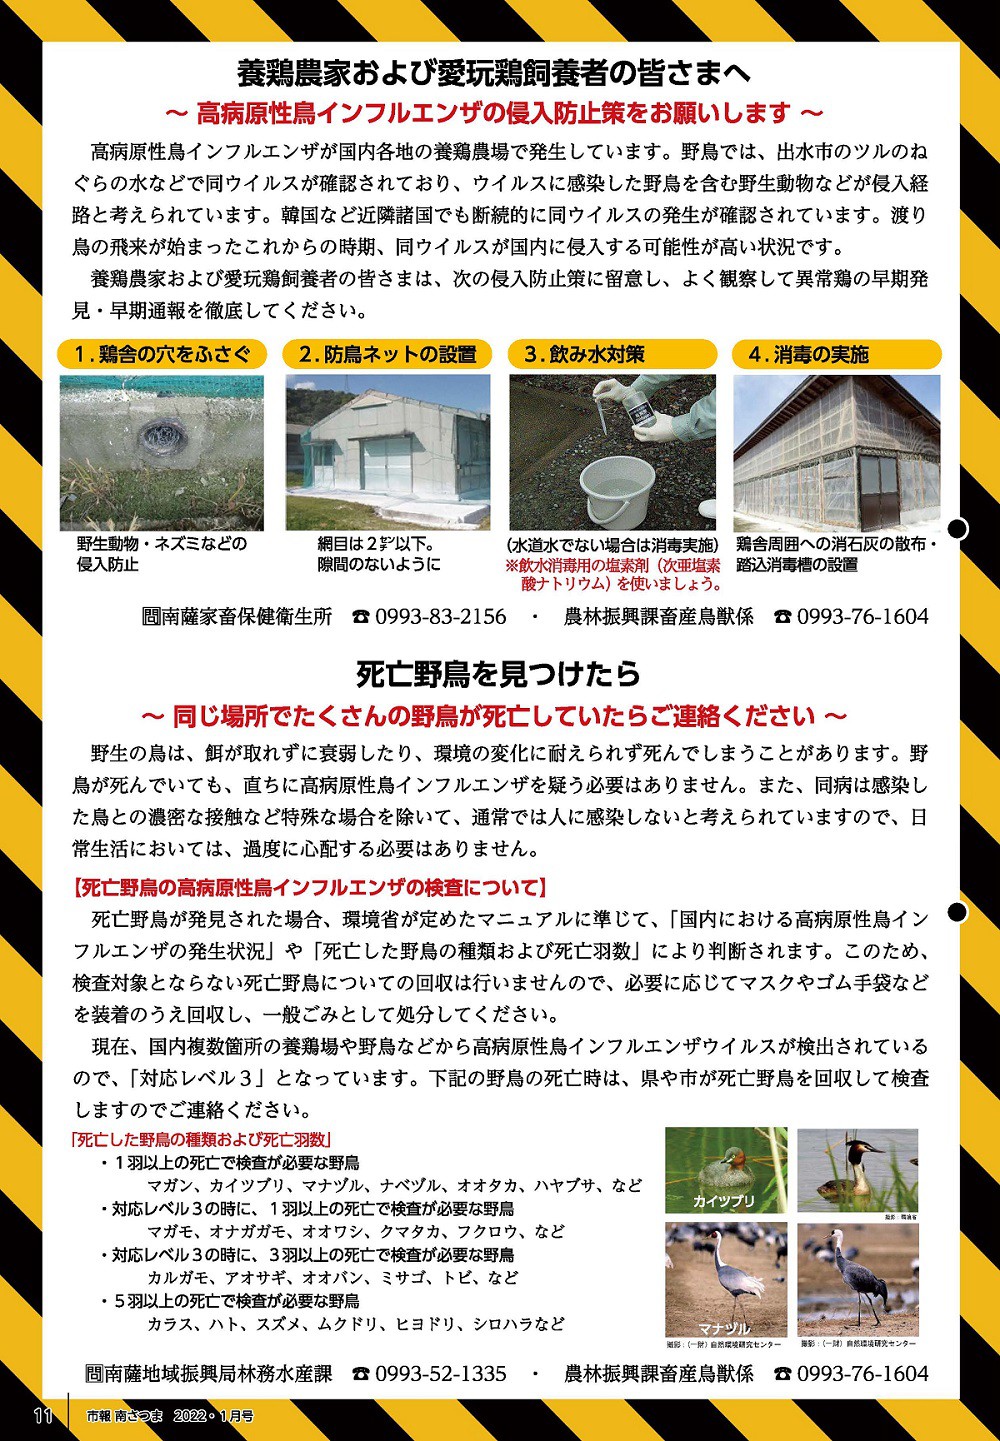 https://www.city.minamisatsuma.lg.jp/shimin/images/1taisaku040106yachou.jpg